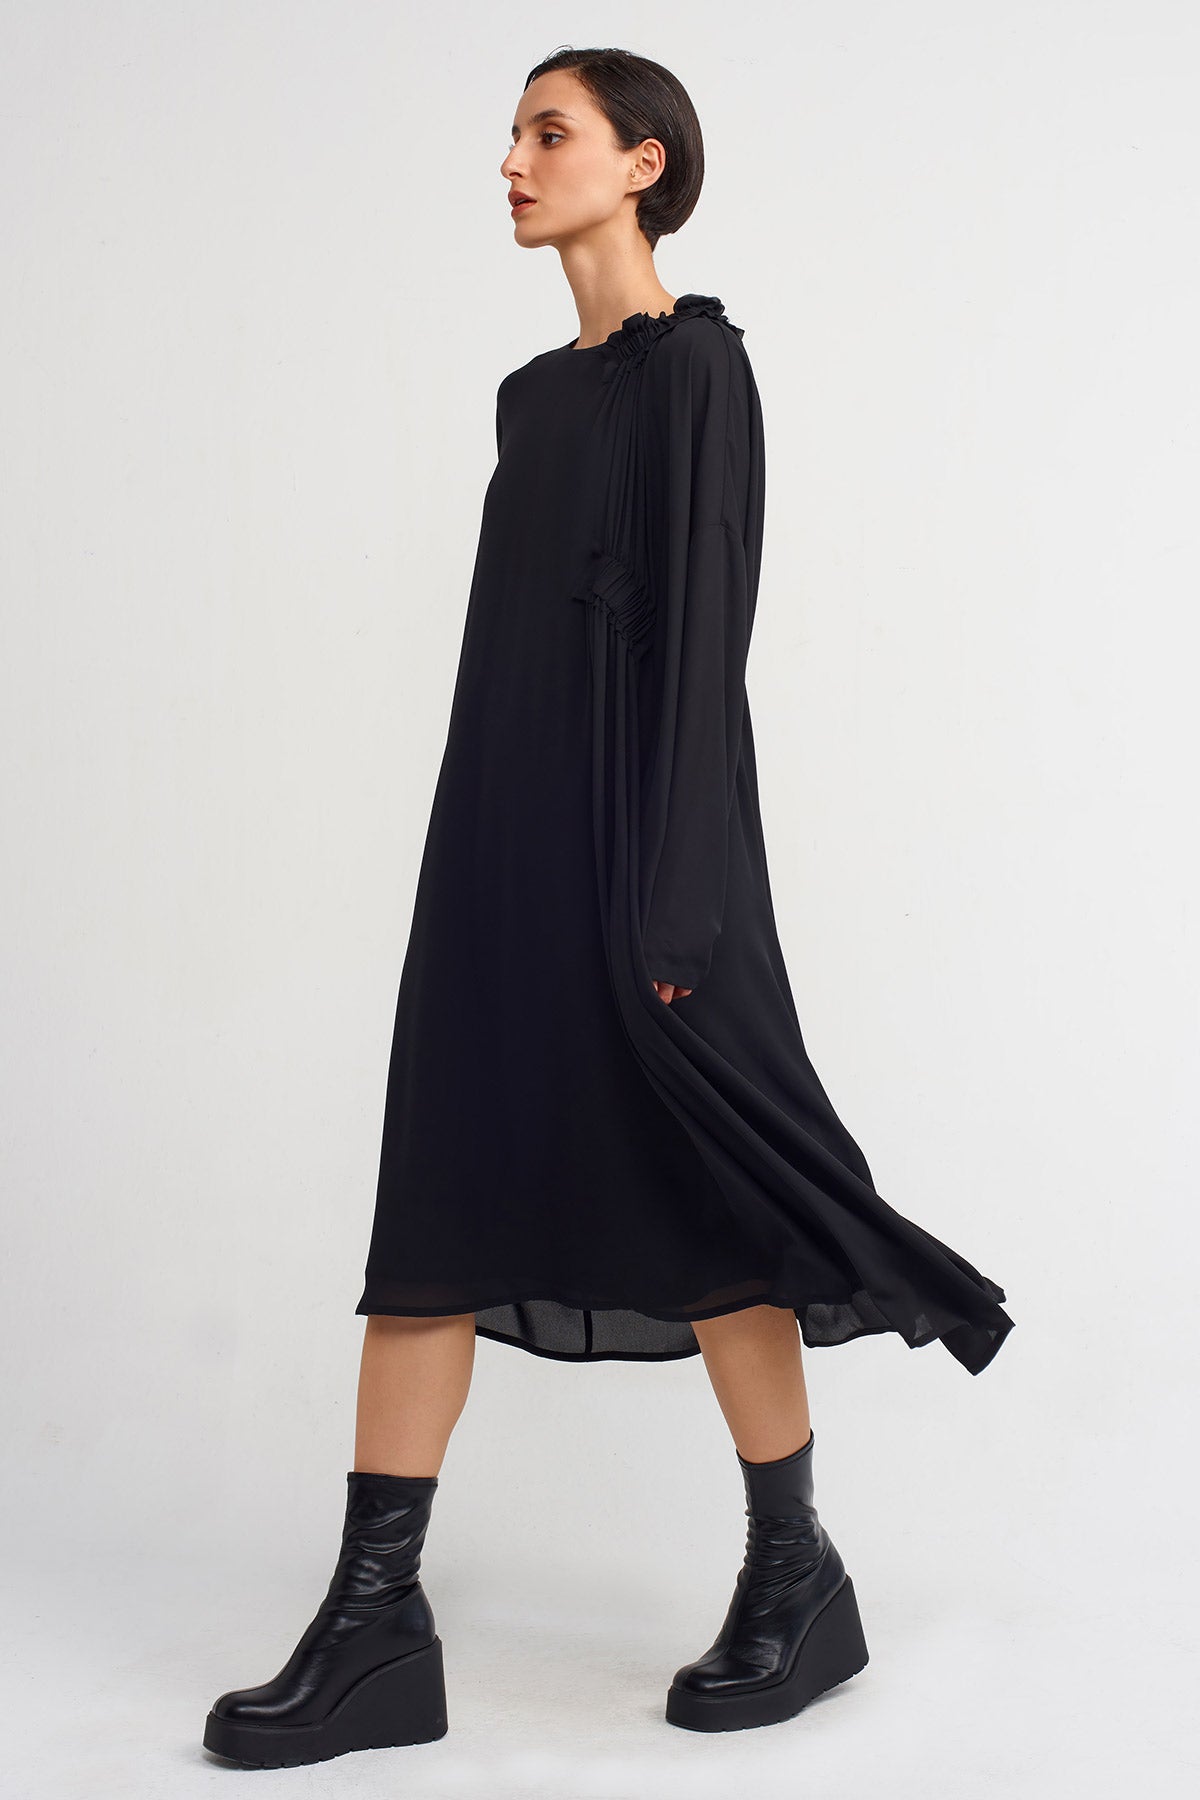 Black Stylish Dress with Elastic Ruching Detail -K234014121